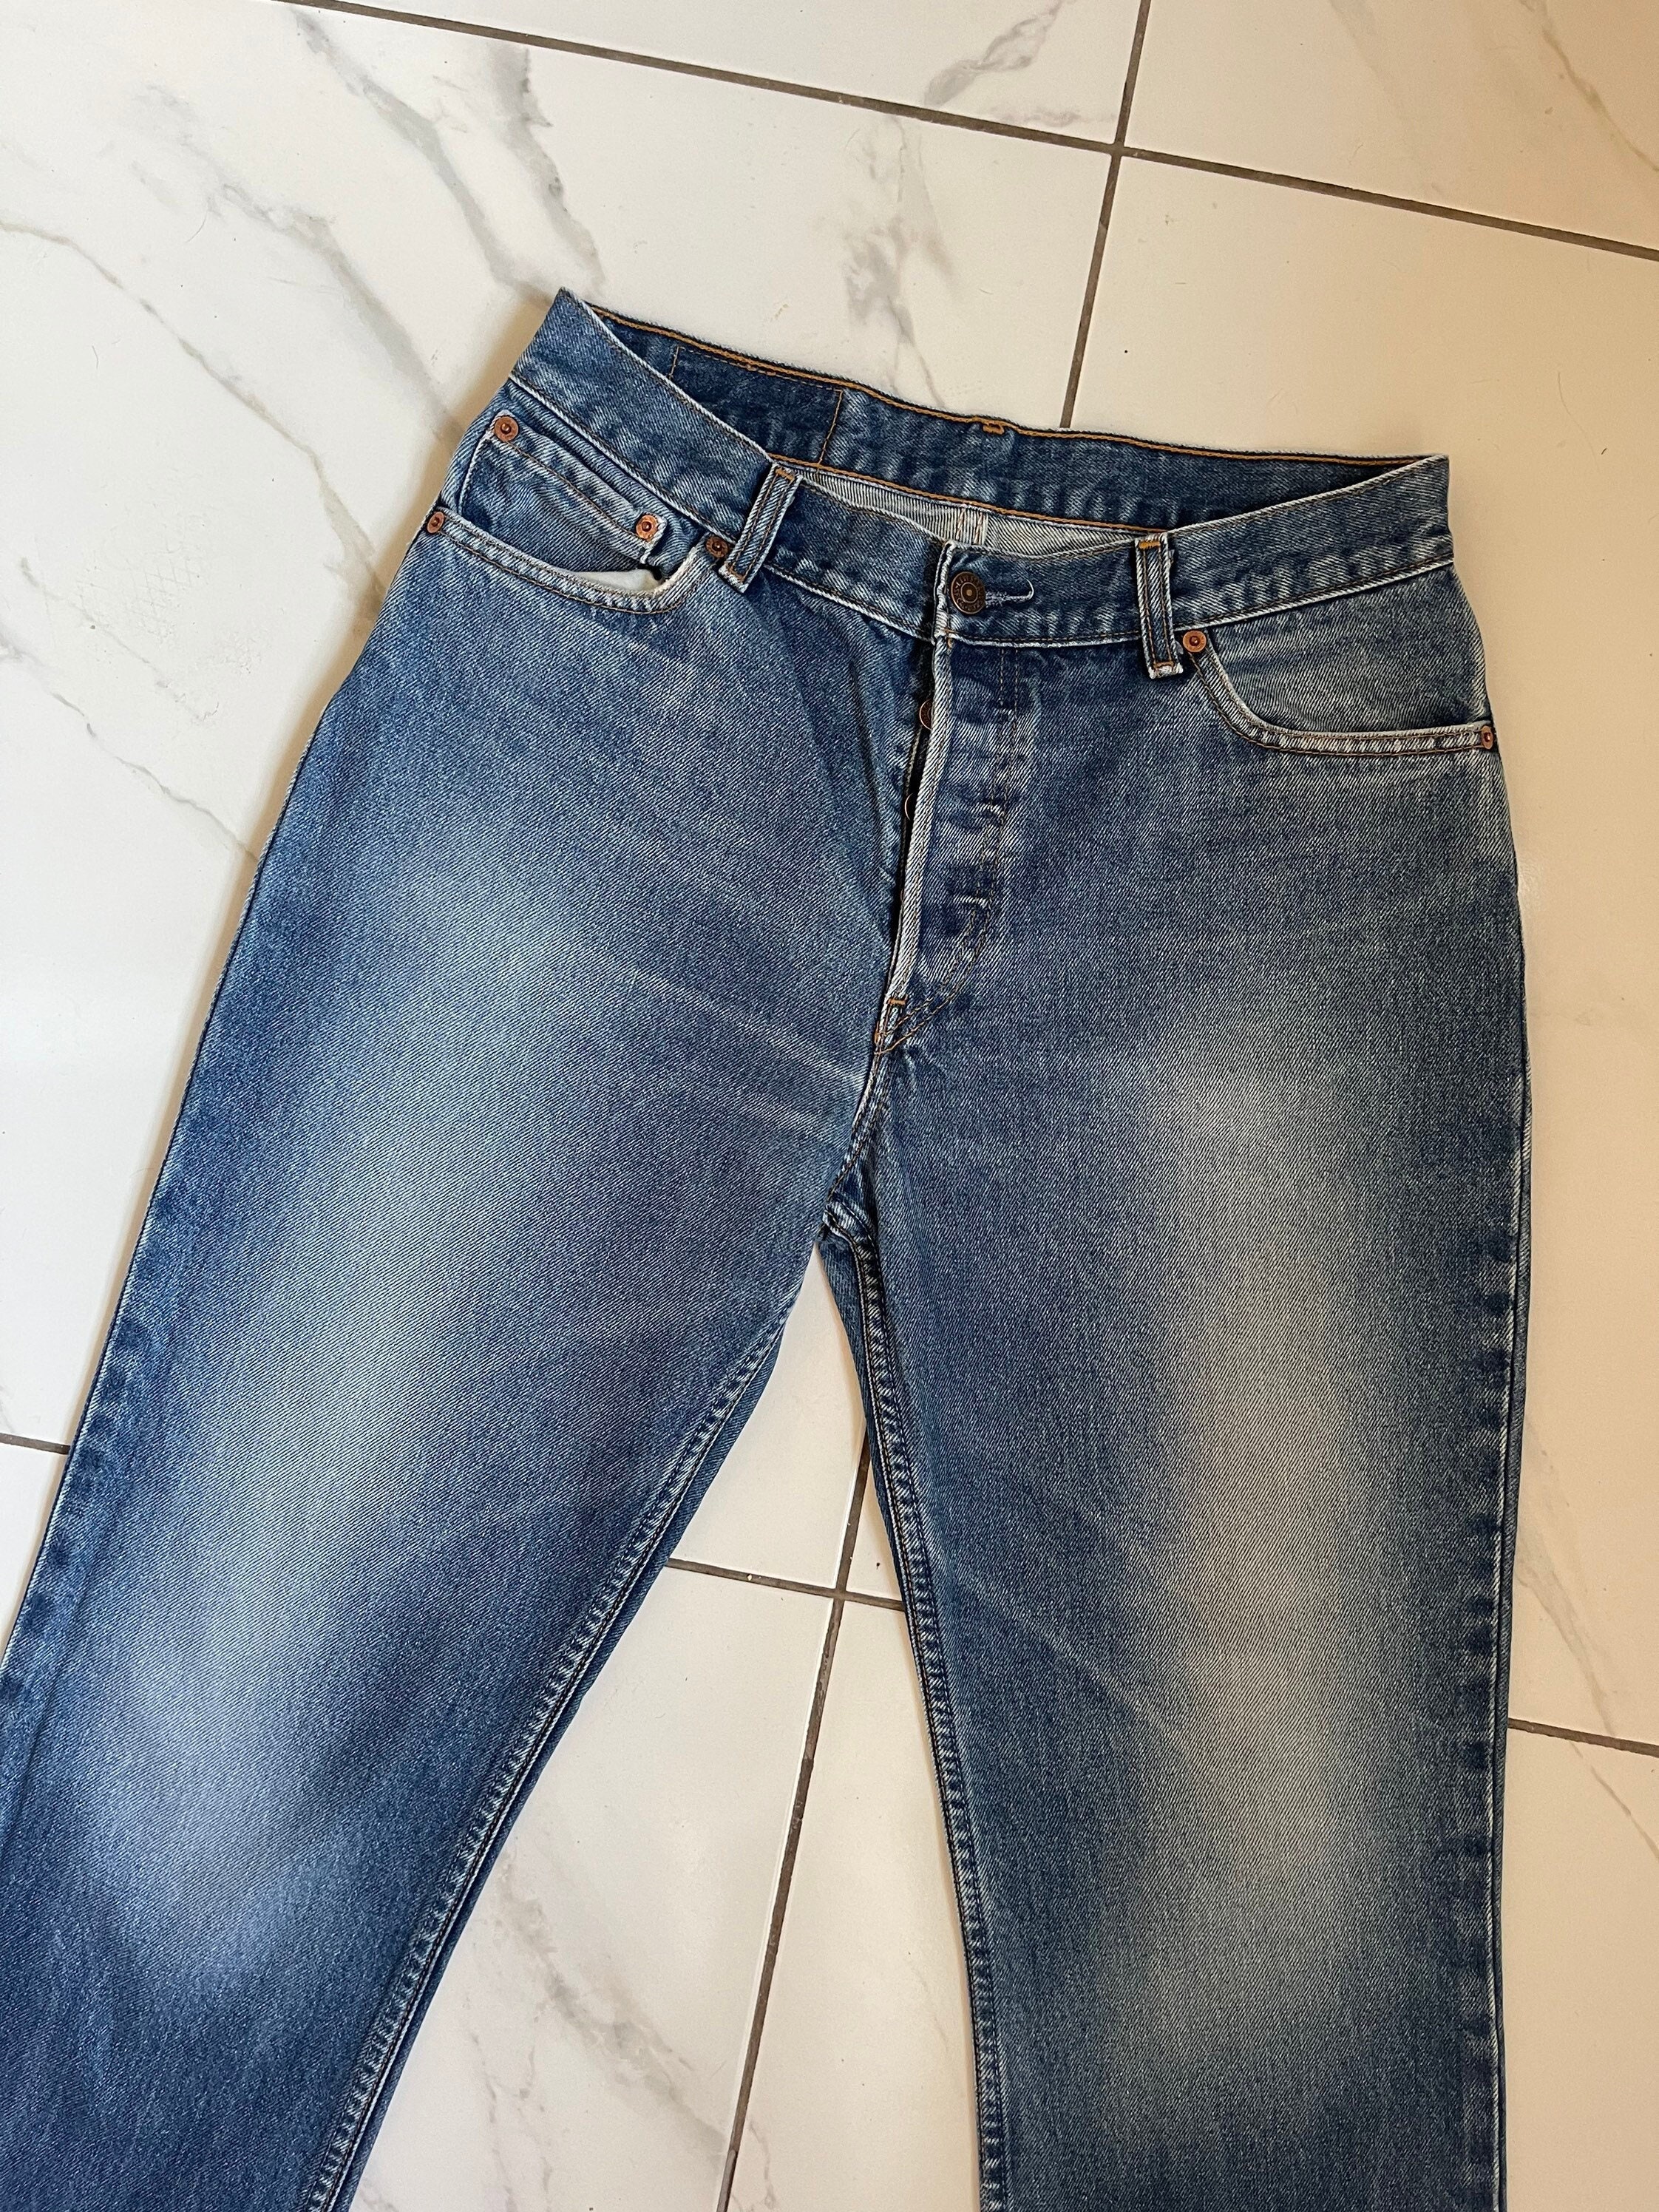 90s Vintage Distressed Faded Dark Wash Levi 575 Jeans Waist 29 Inch Leg 30  Inches Vintage Levi Jeans Straight Leg New -  Australia